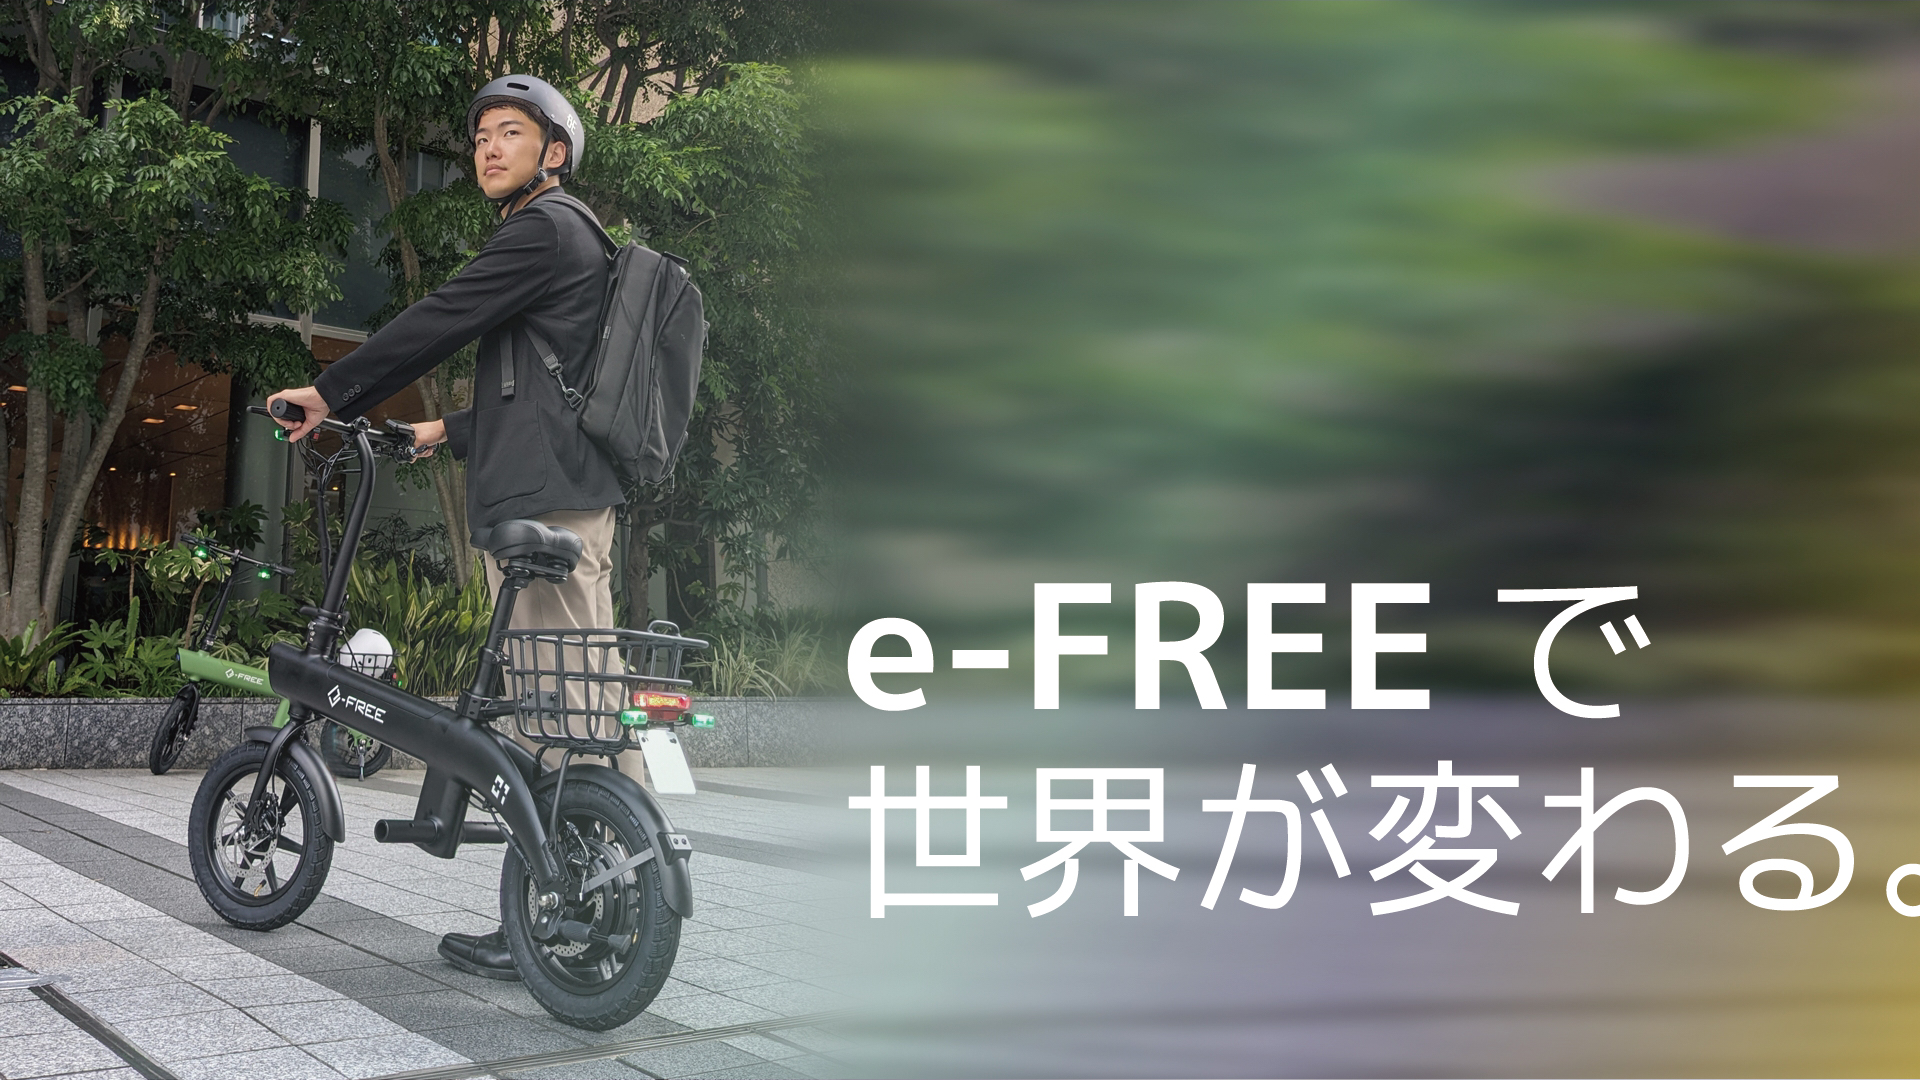 e-free,efree,イーフリー,特例,特定小型,自転車,カーメイト,carmate,